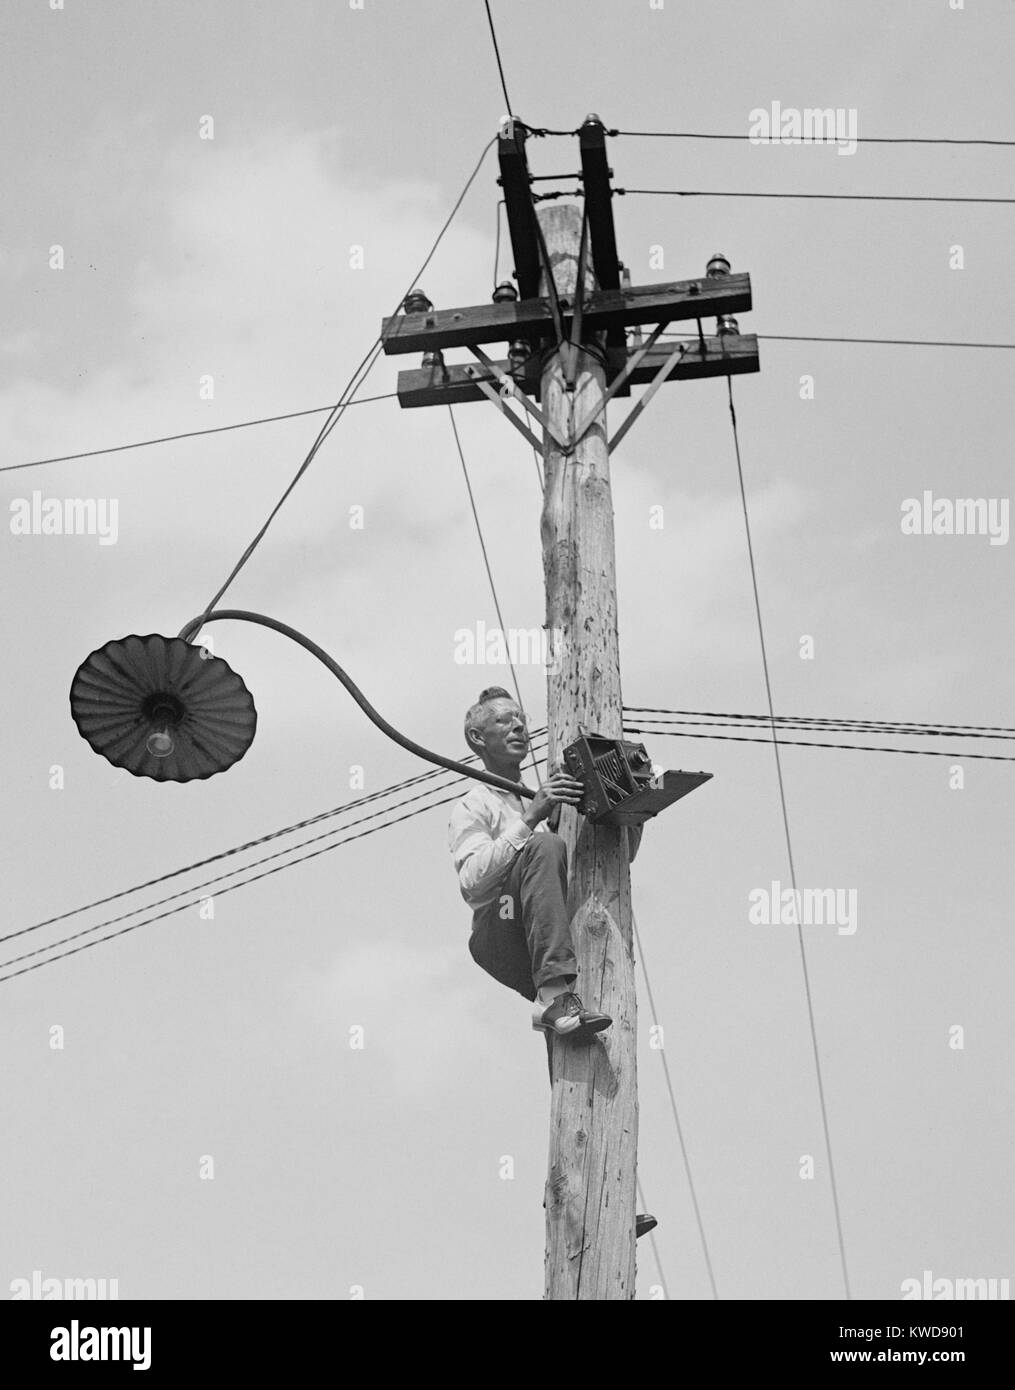 https://c8.alamy.com/comp/KWD901/washington-photographer-aw-leonard-climbed-a-utility-pole-to-get-the-KWD901.jpg